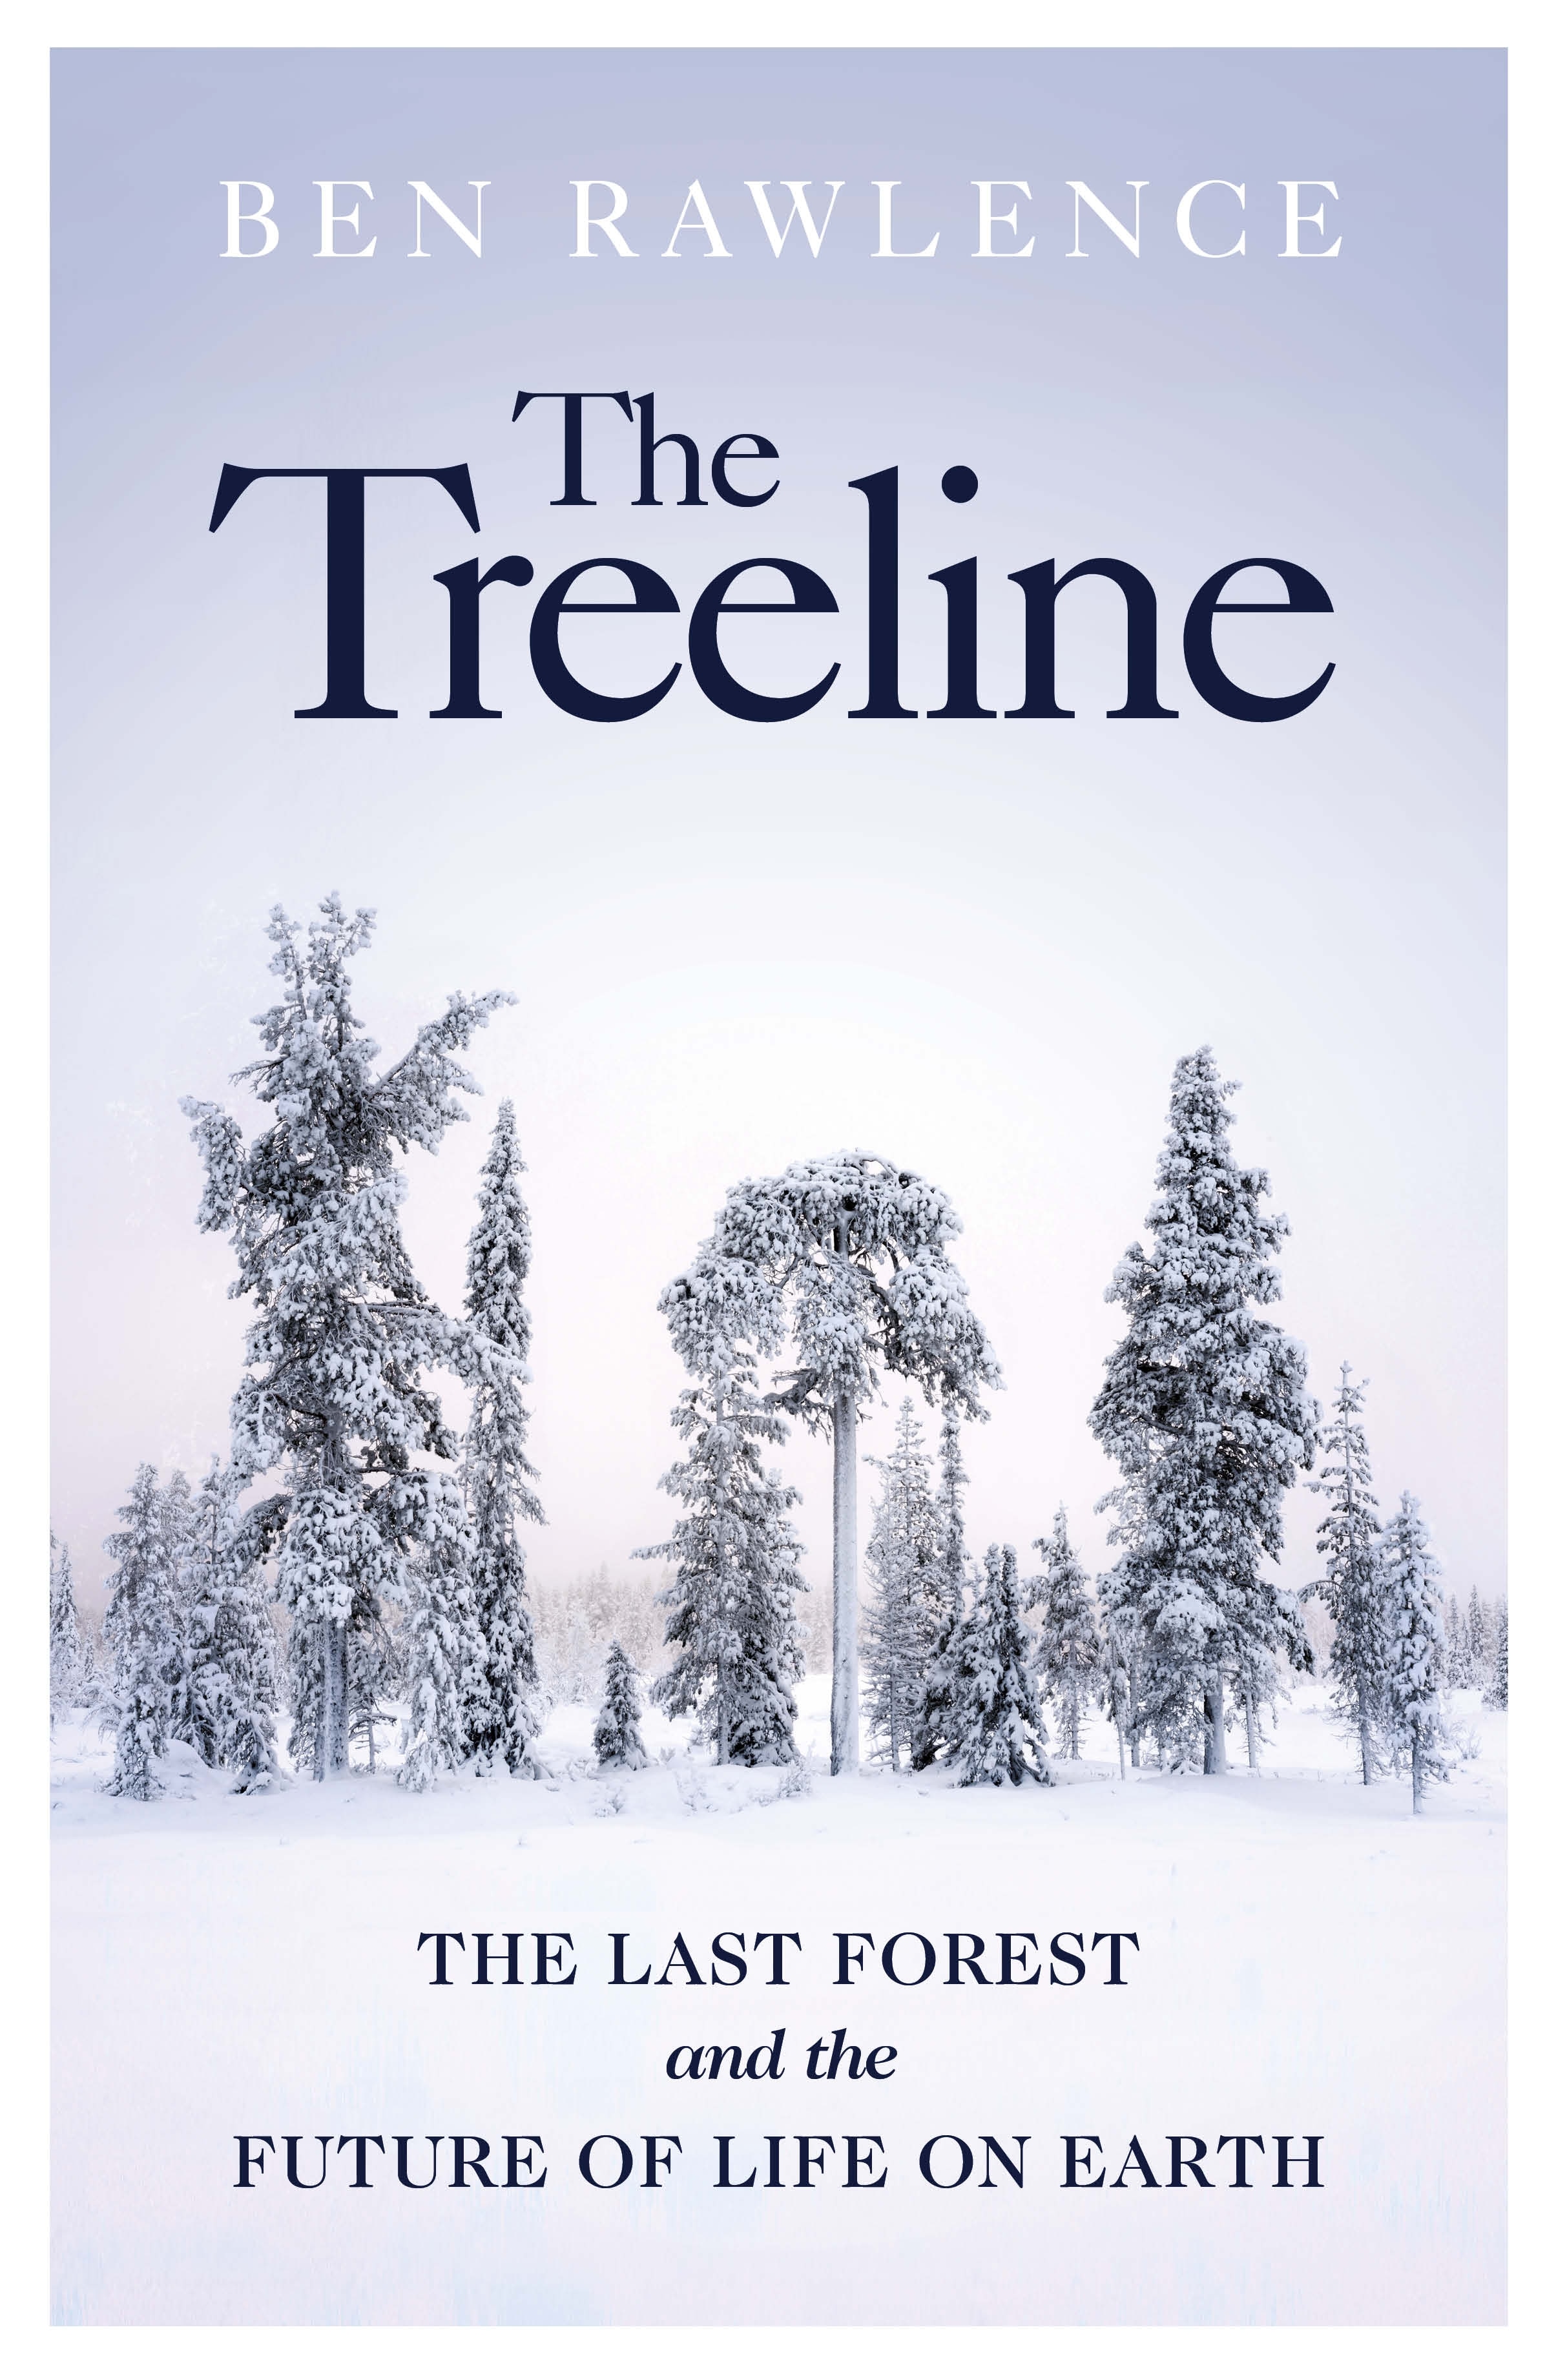 Book “The Treeline” by Ben Rawlence — January 13, 2022